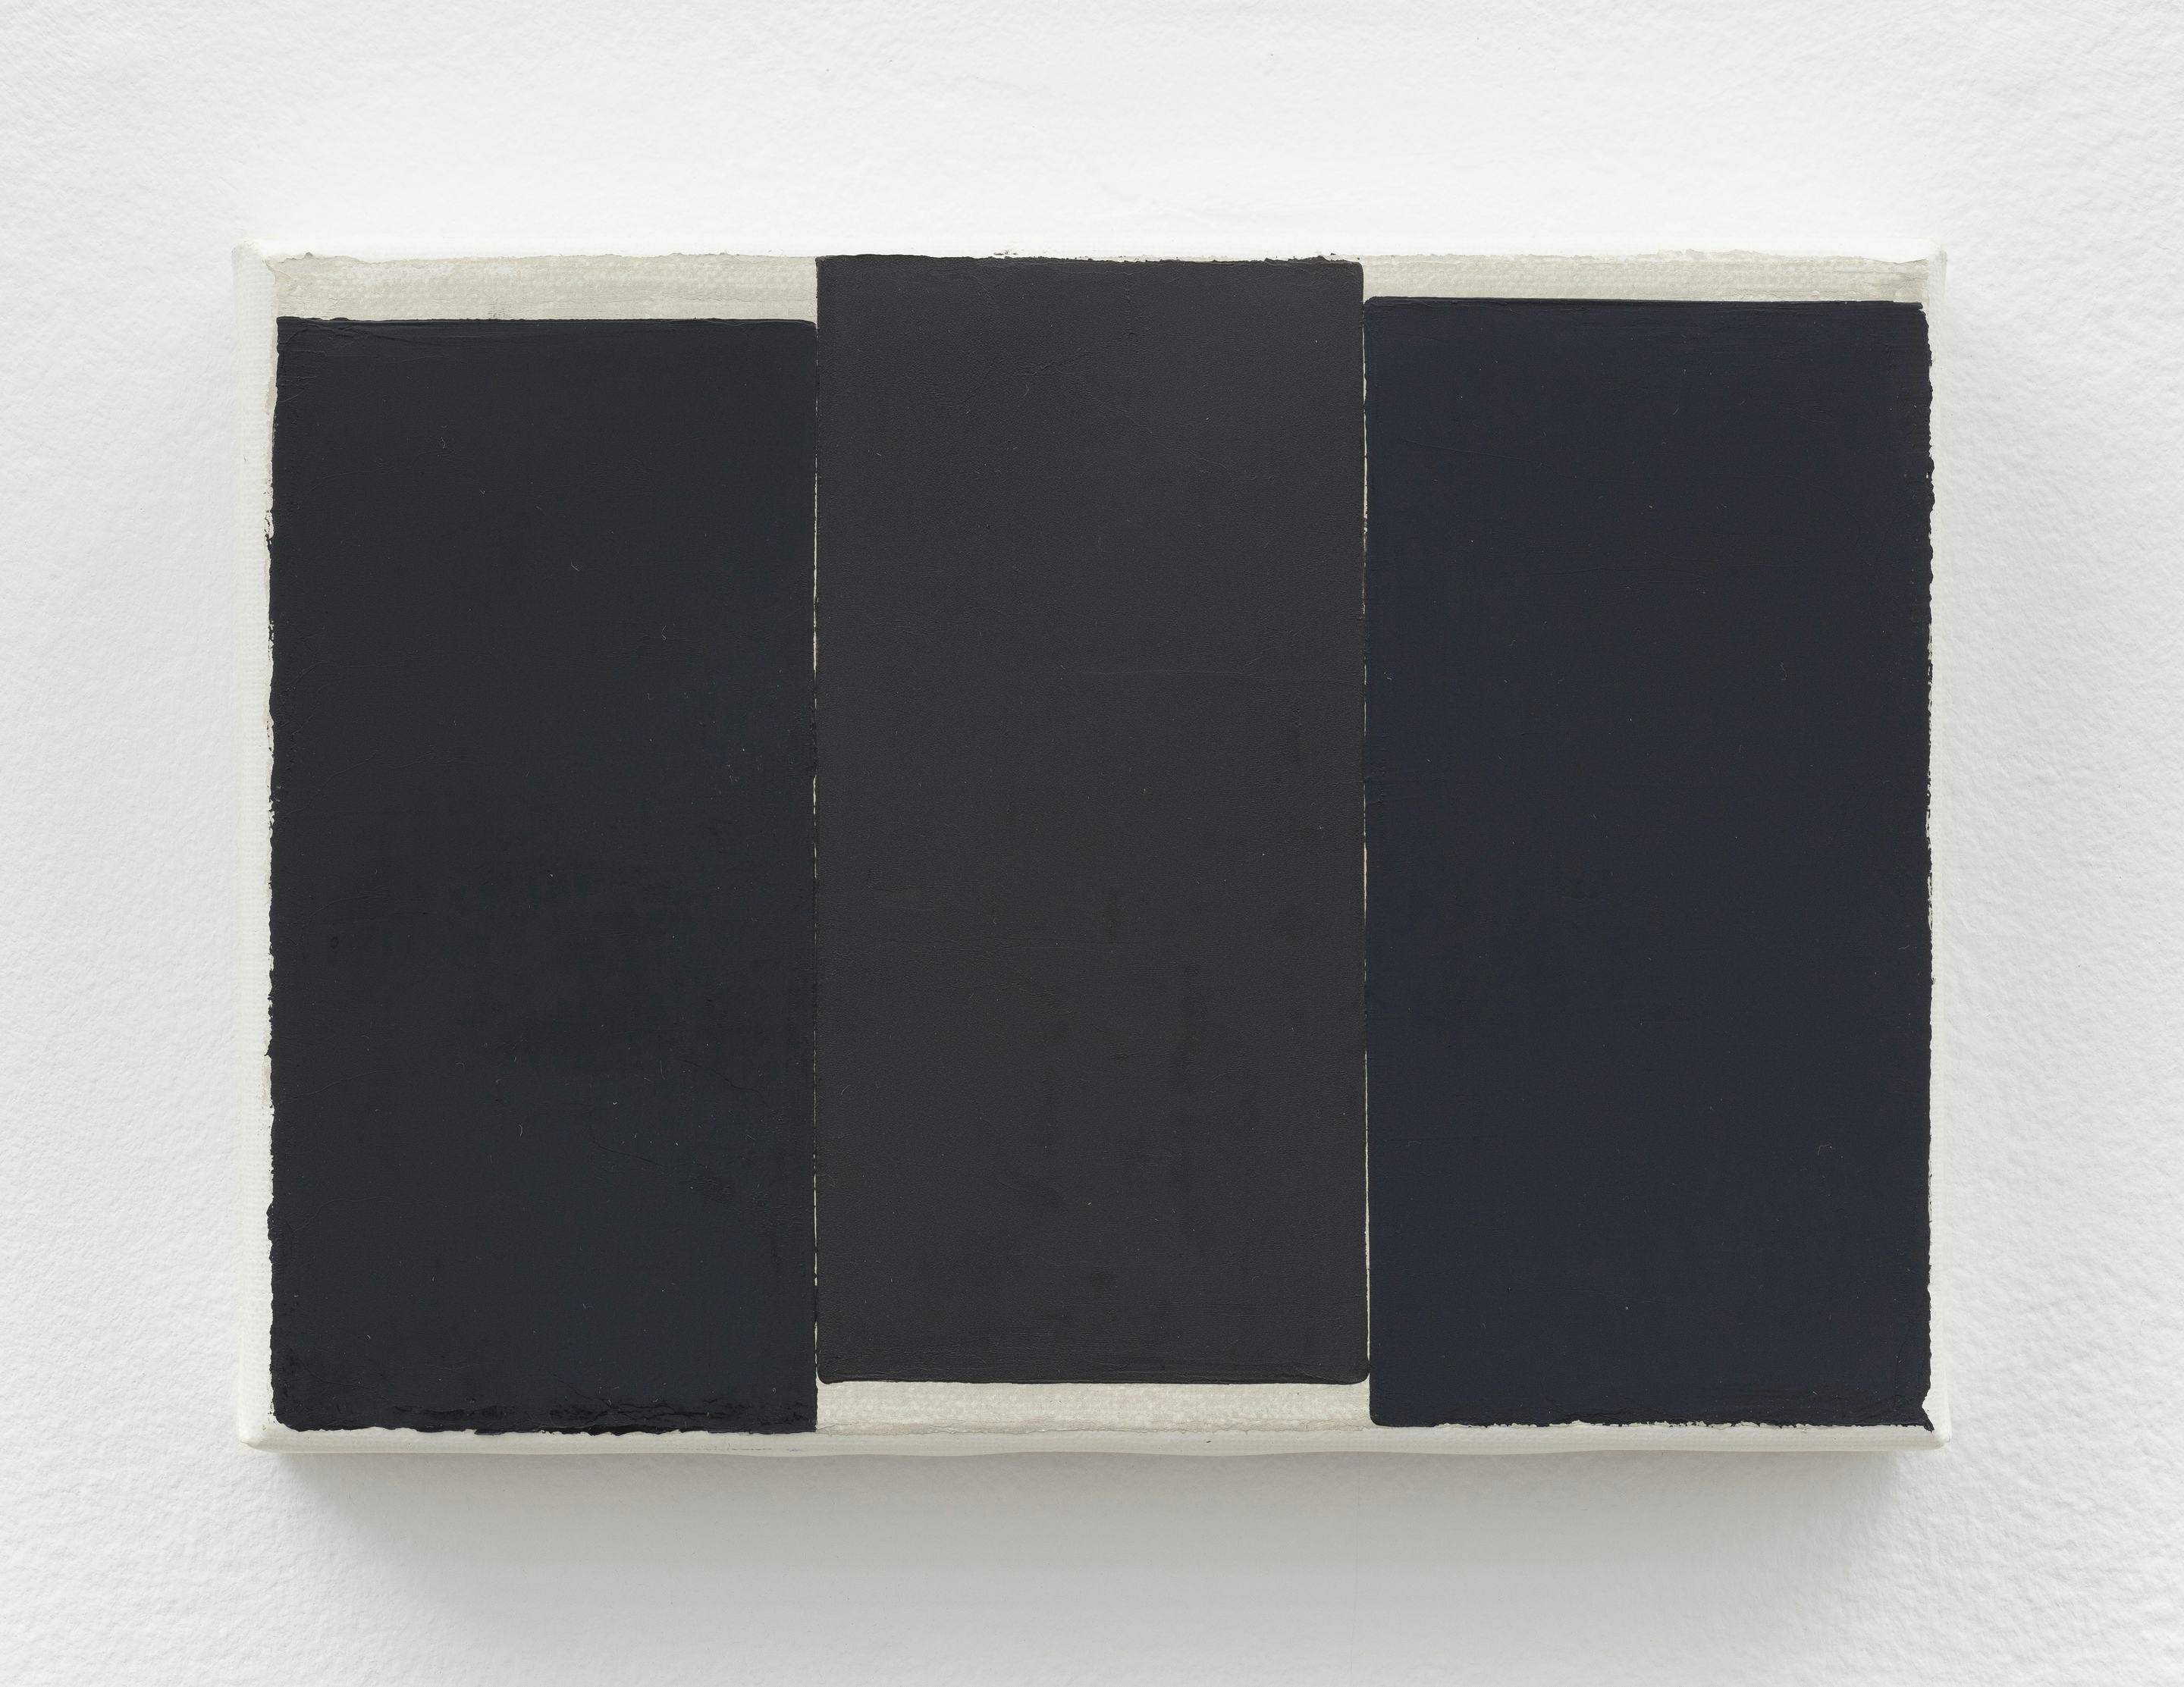 black-LVS (2020)
Oil on canvas. 5h x 7w inches (12.7h × 18w cm)